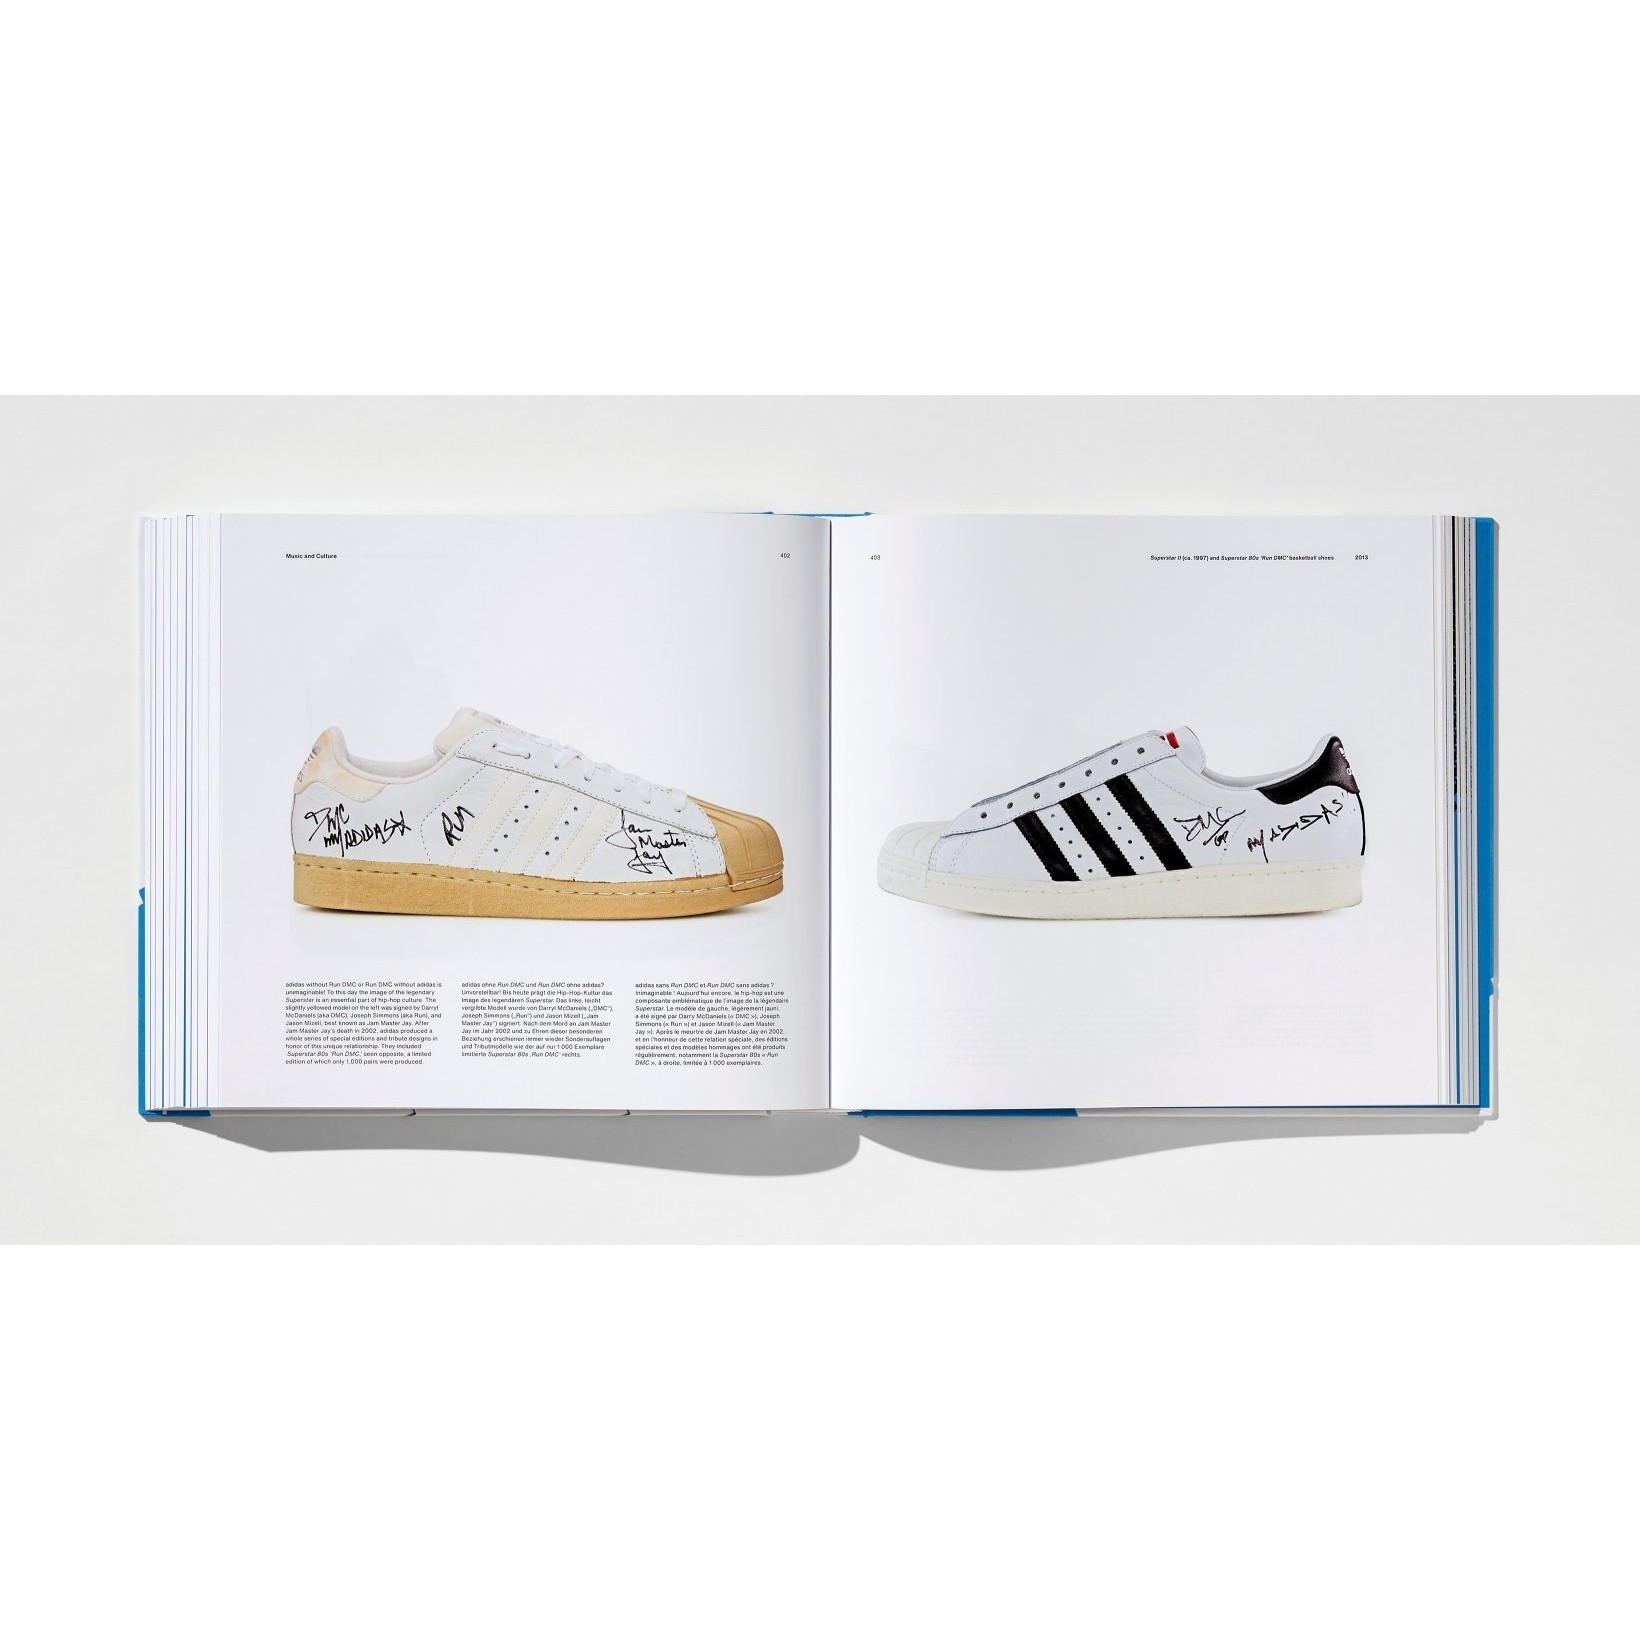 Sueño áspero Depender de Diacrítico The Adidas Archive. The Footwear Collection Book